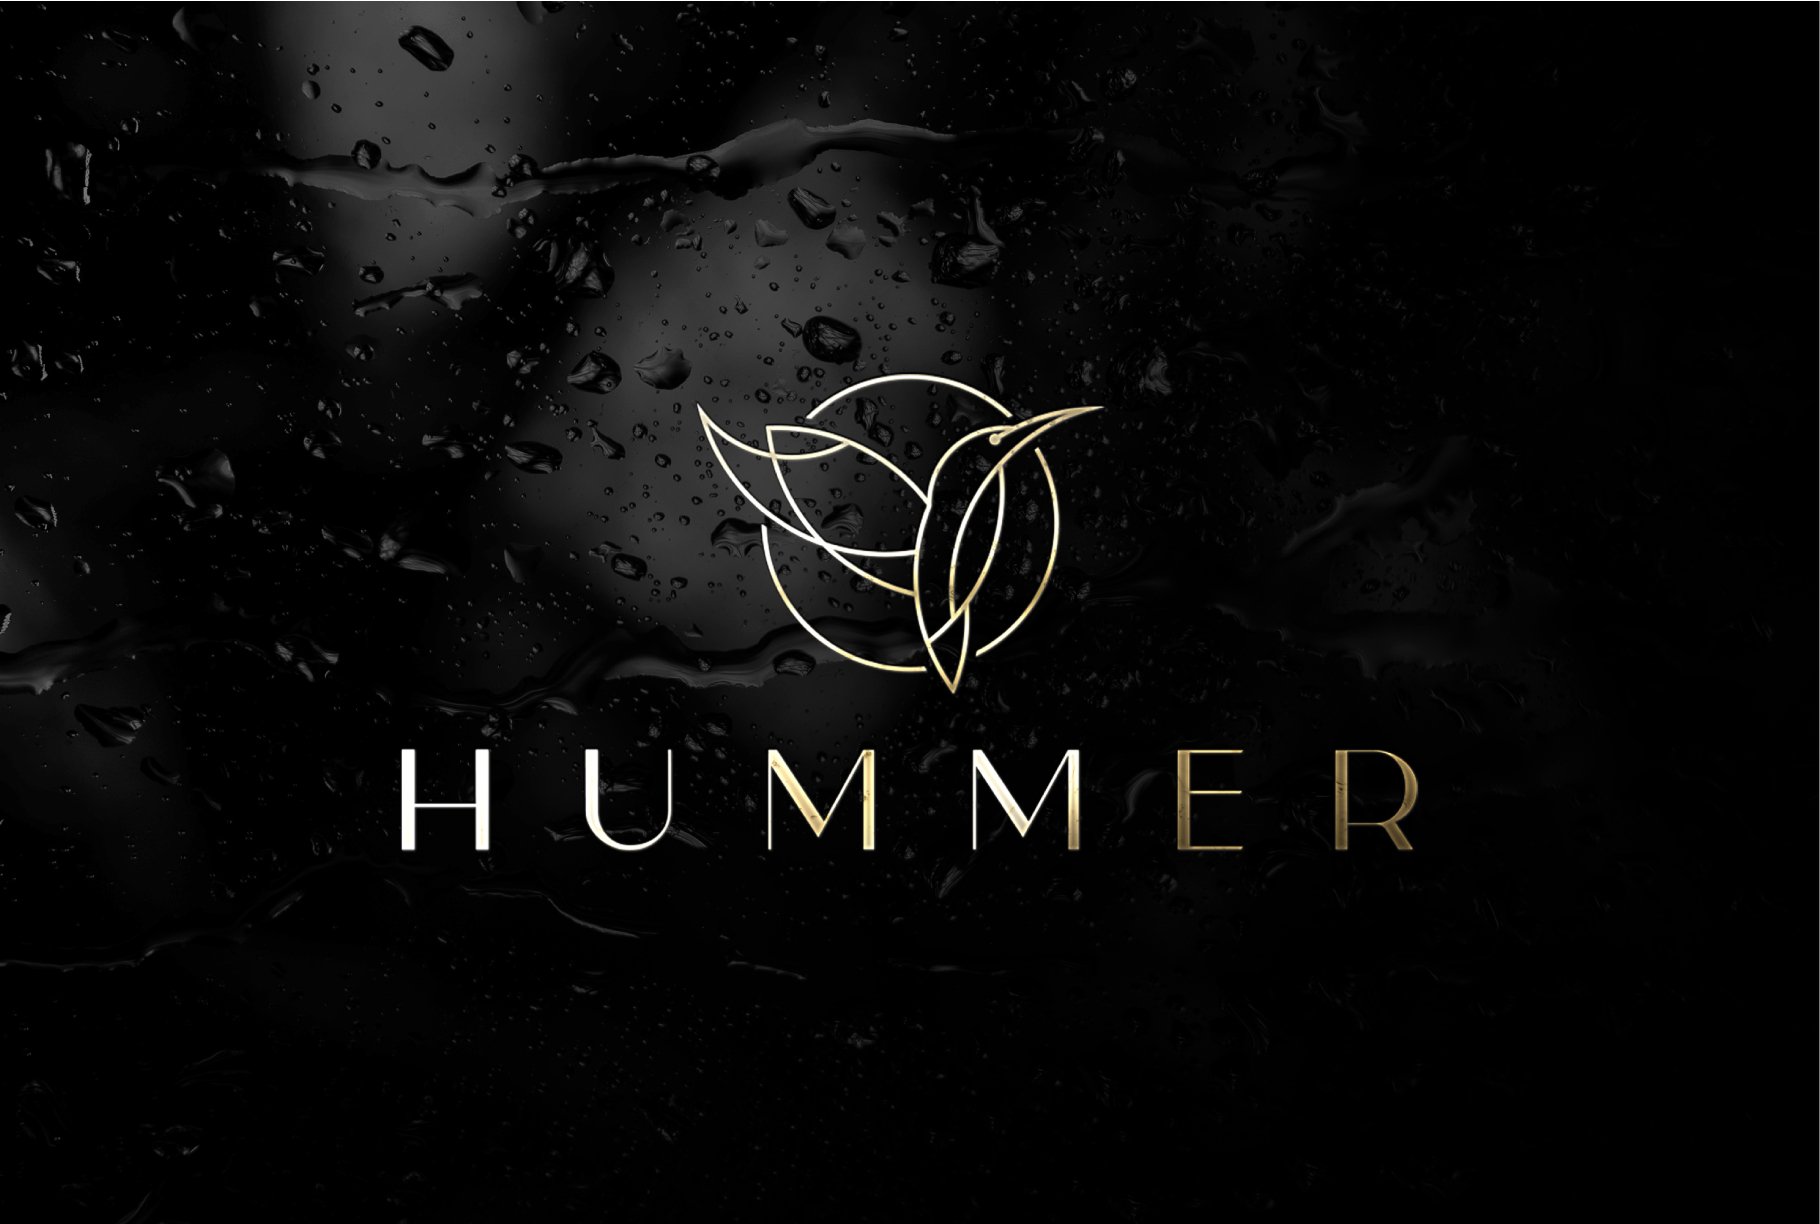 Humming Bird logo cover image.